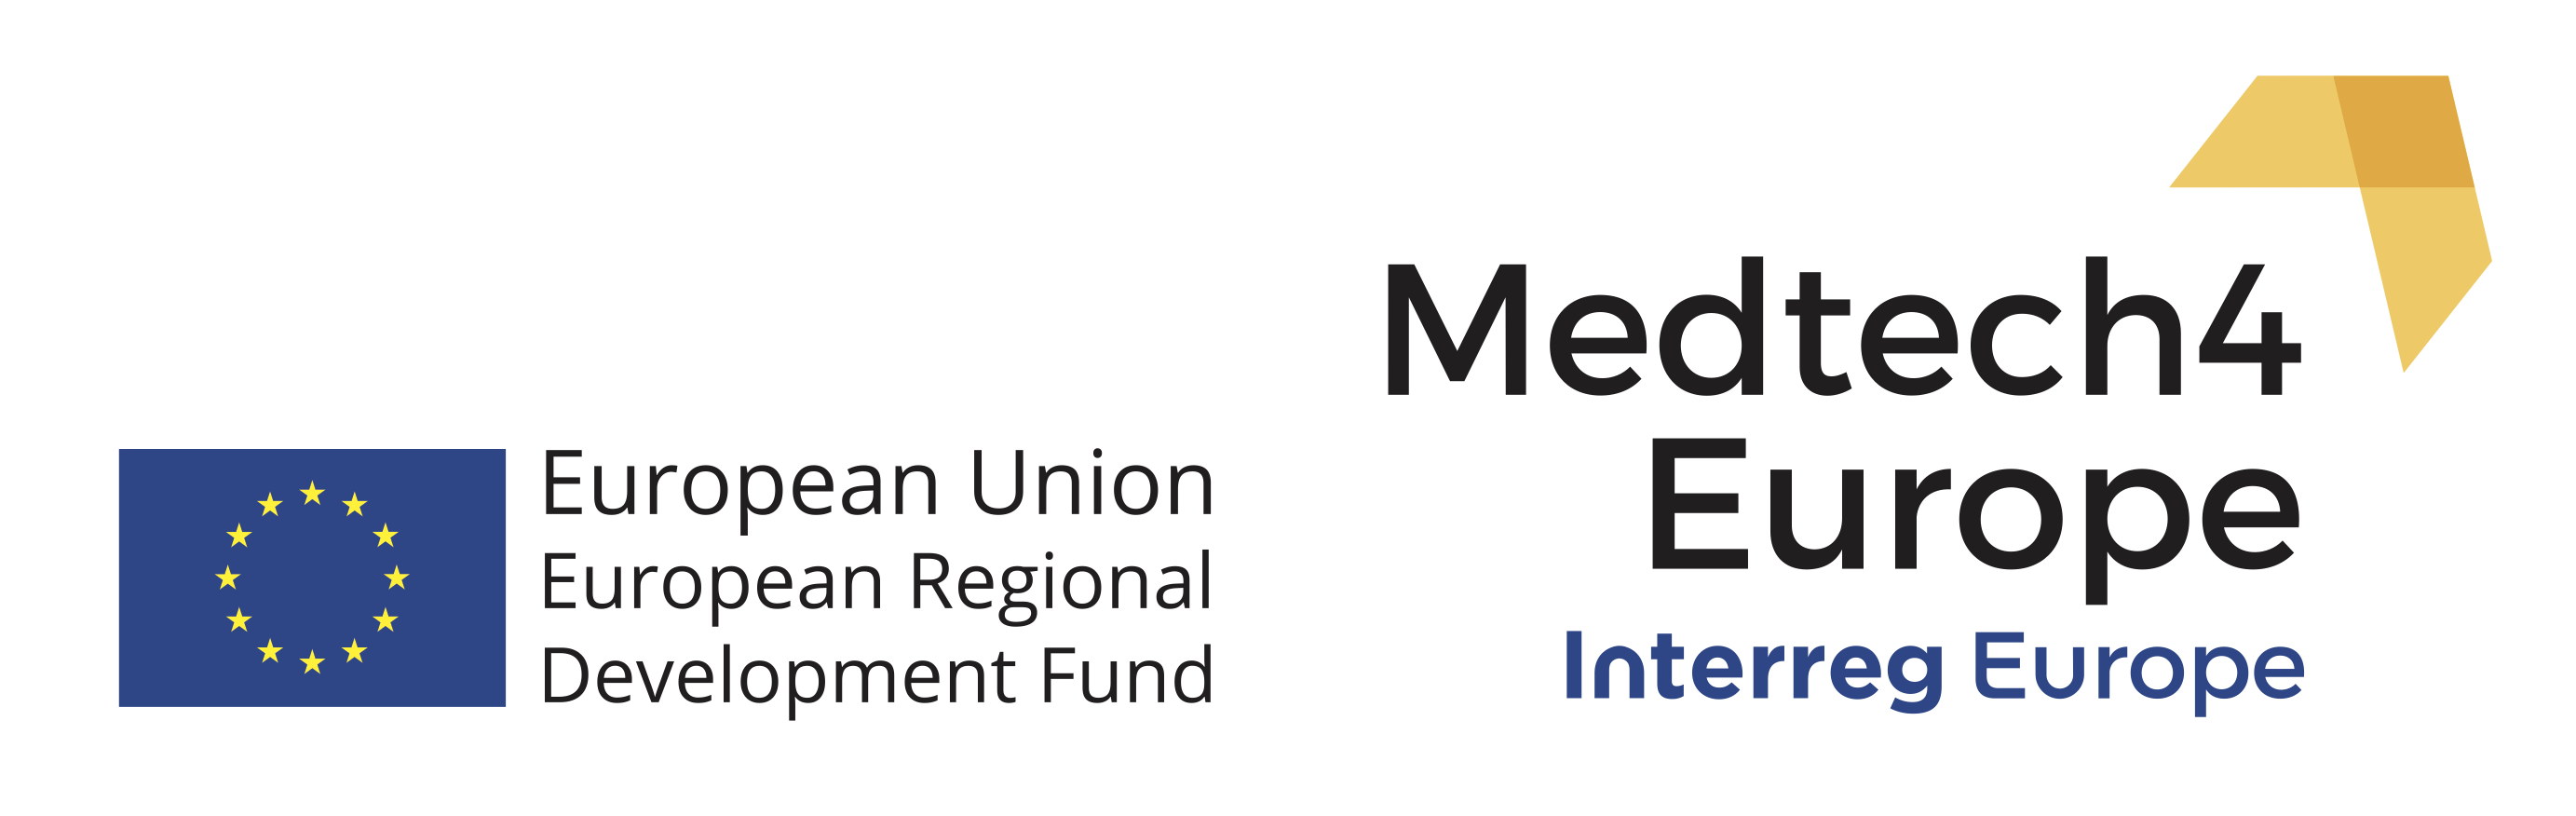 Medtech4 Europe. Interreg Europe. Flag of the European Union.